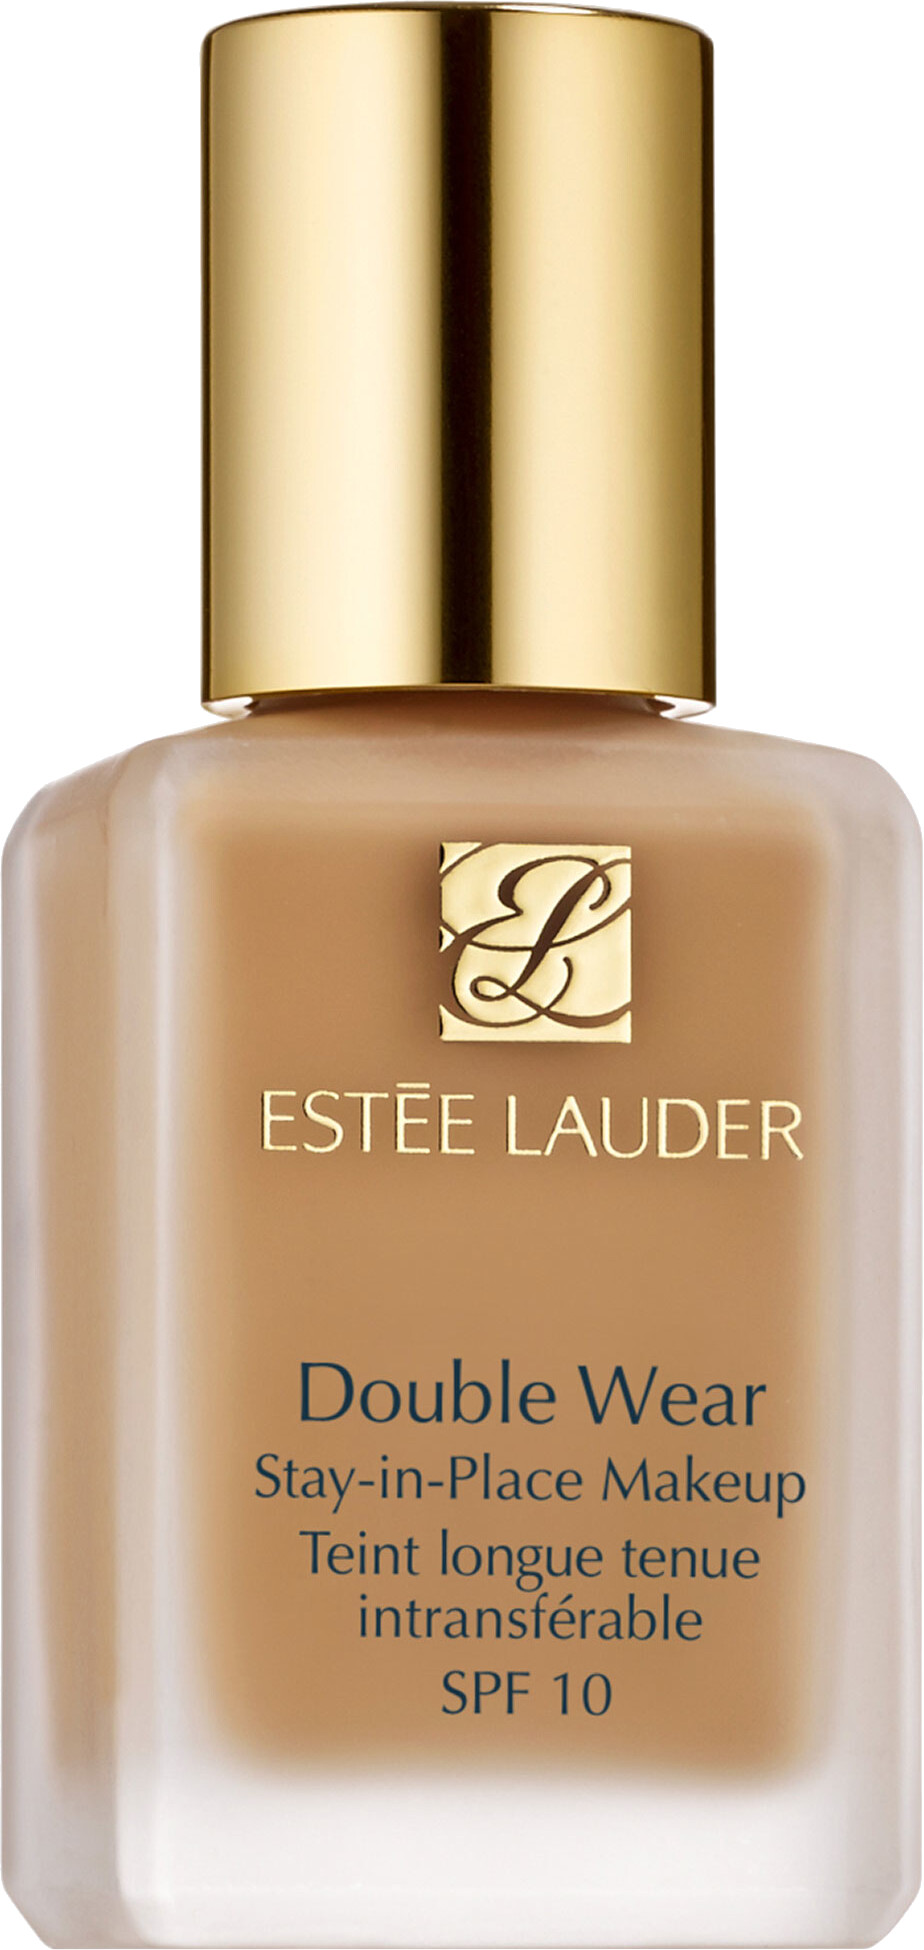 Estee Lauder Double Wear Stay-in-Place Foundation SPF10 30ml 3C1 - Dusk